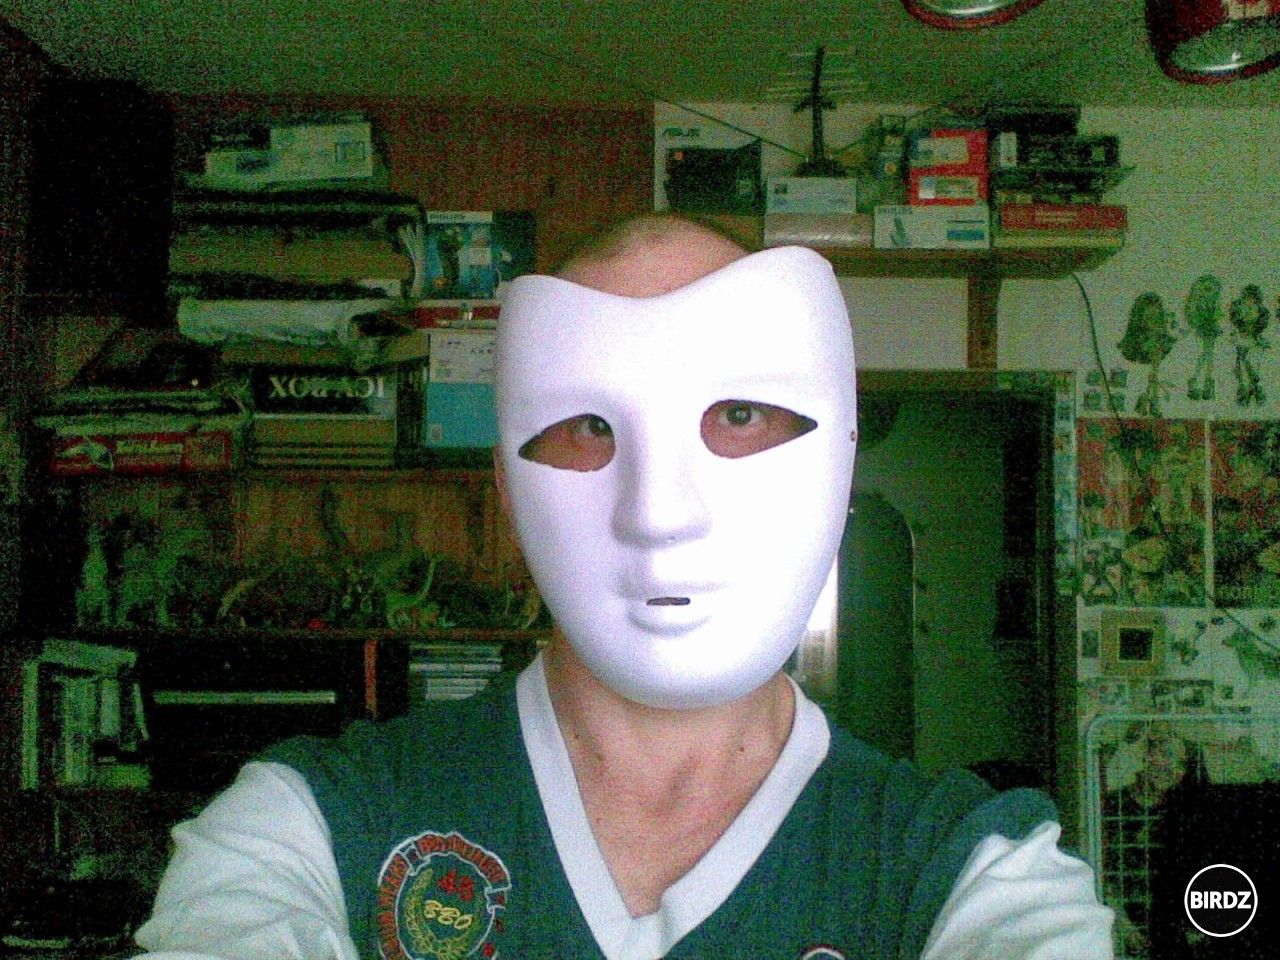 Ja Andrej v bielej maske od Helium King alias Party Deko hehe! ...